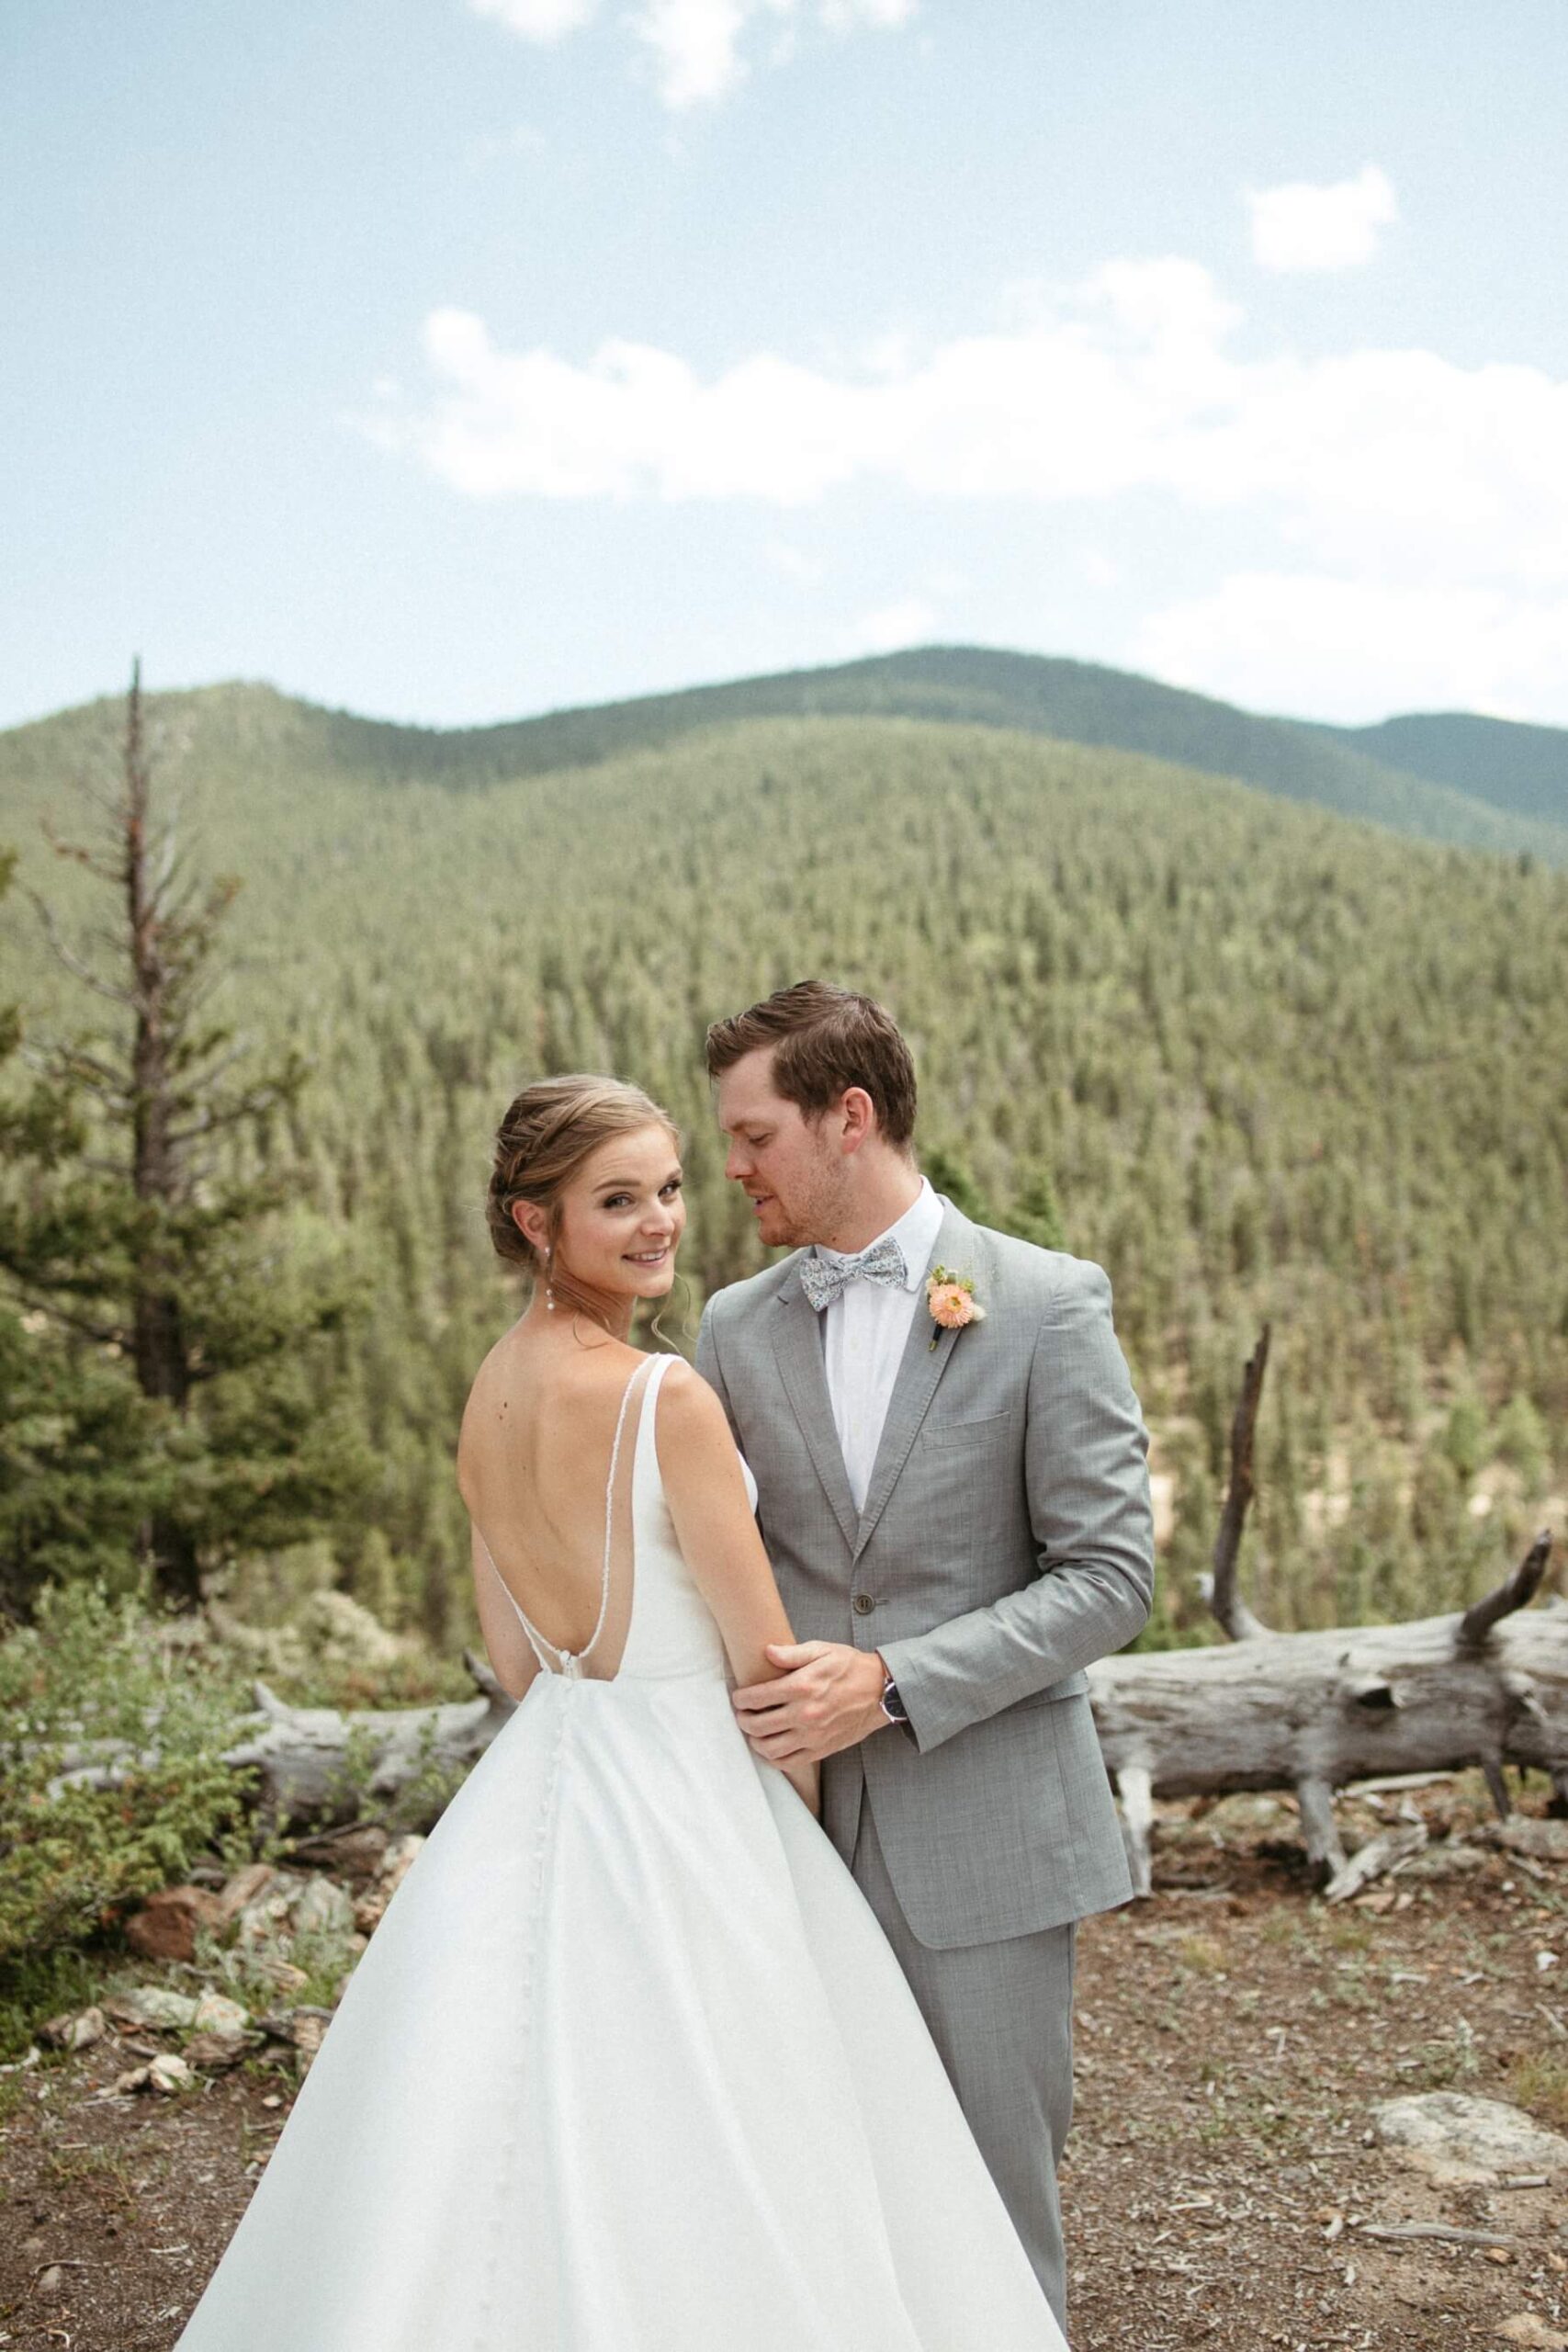 Groom looking at bride as she looks at camera at North Star Gatherings, a Colorado mountain wedding venue